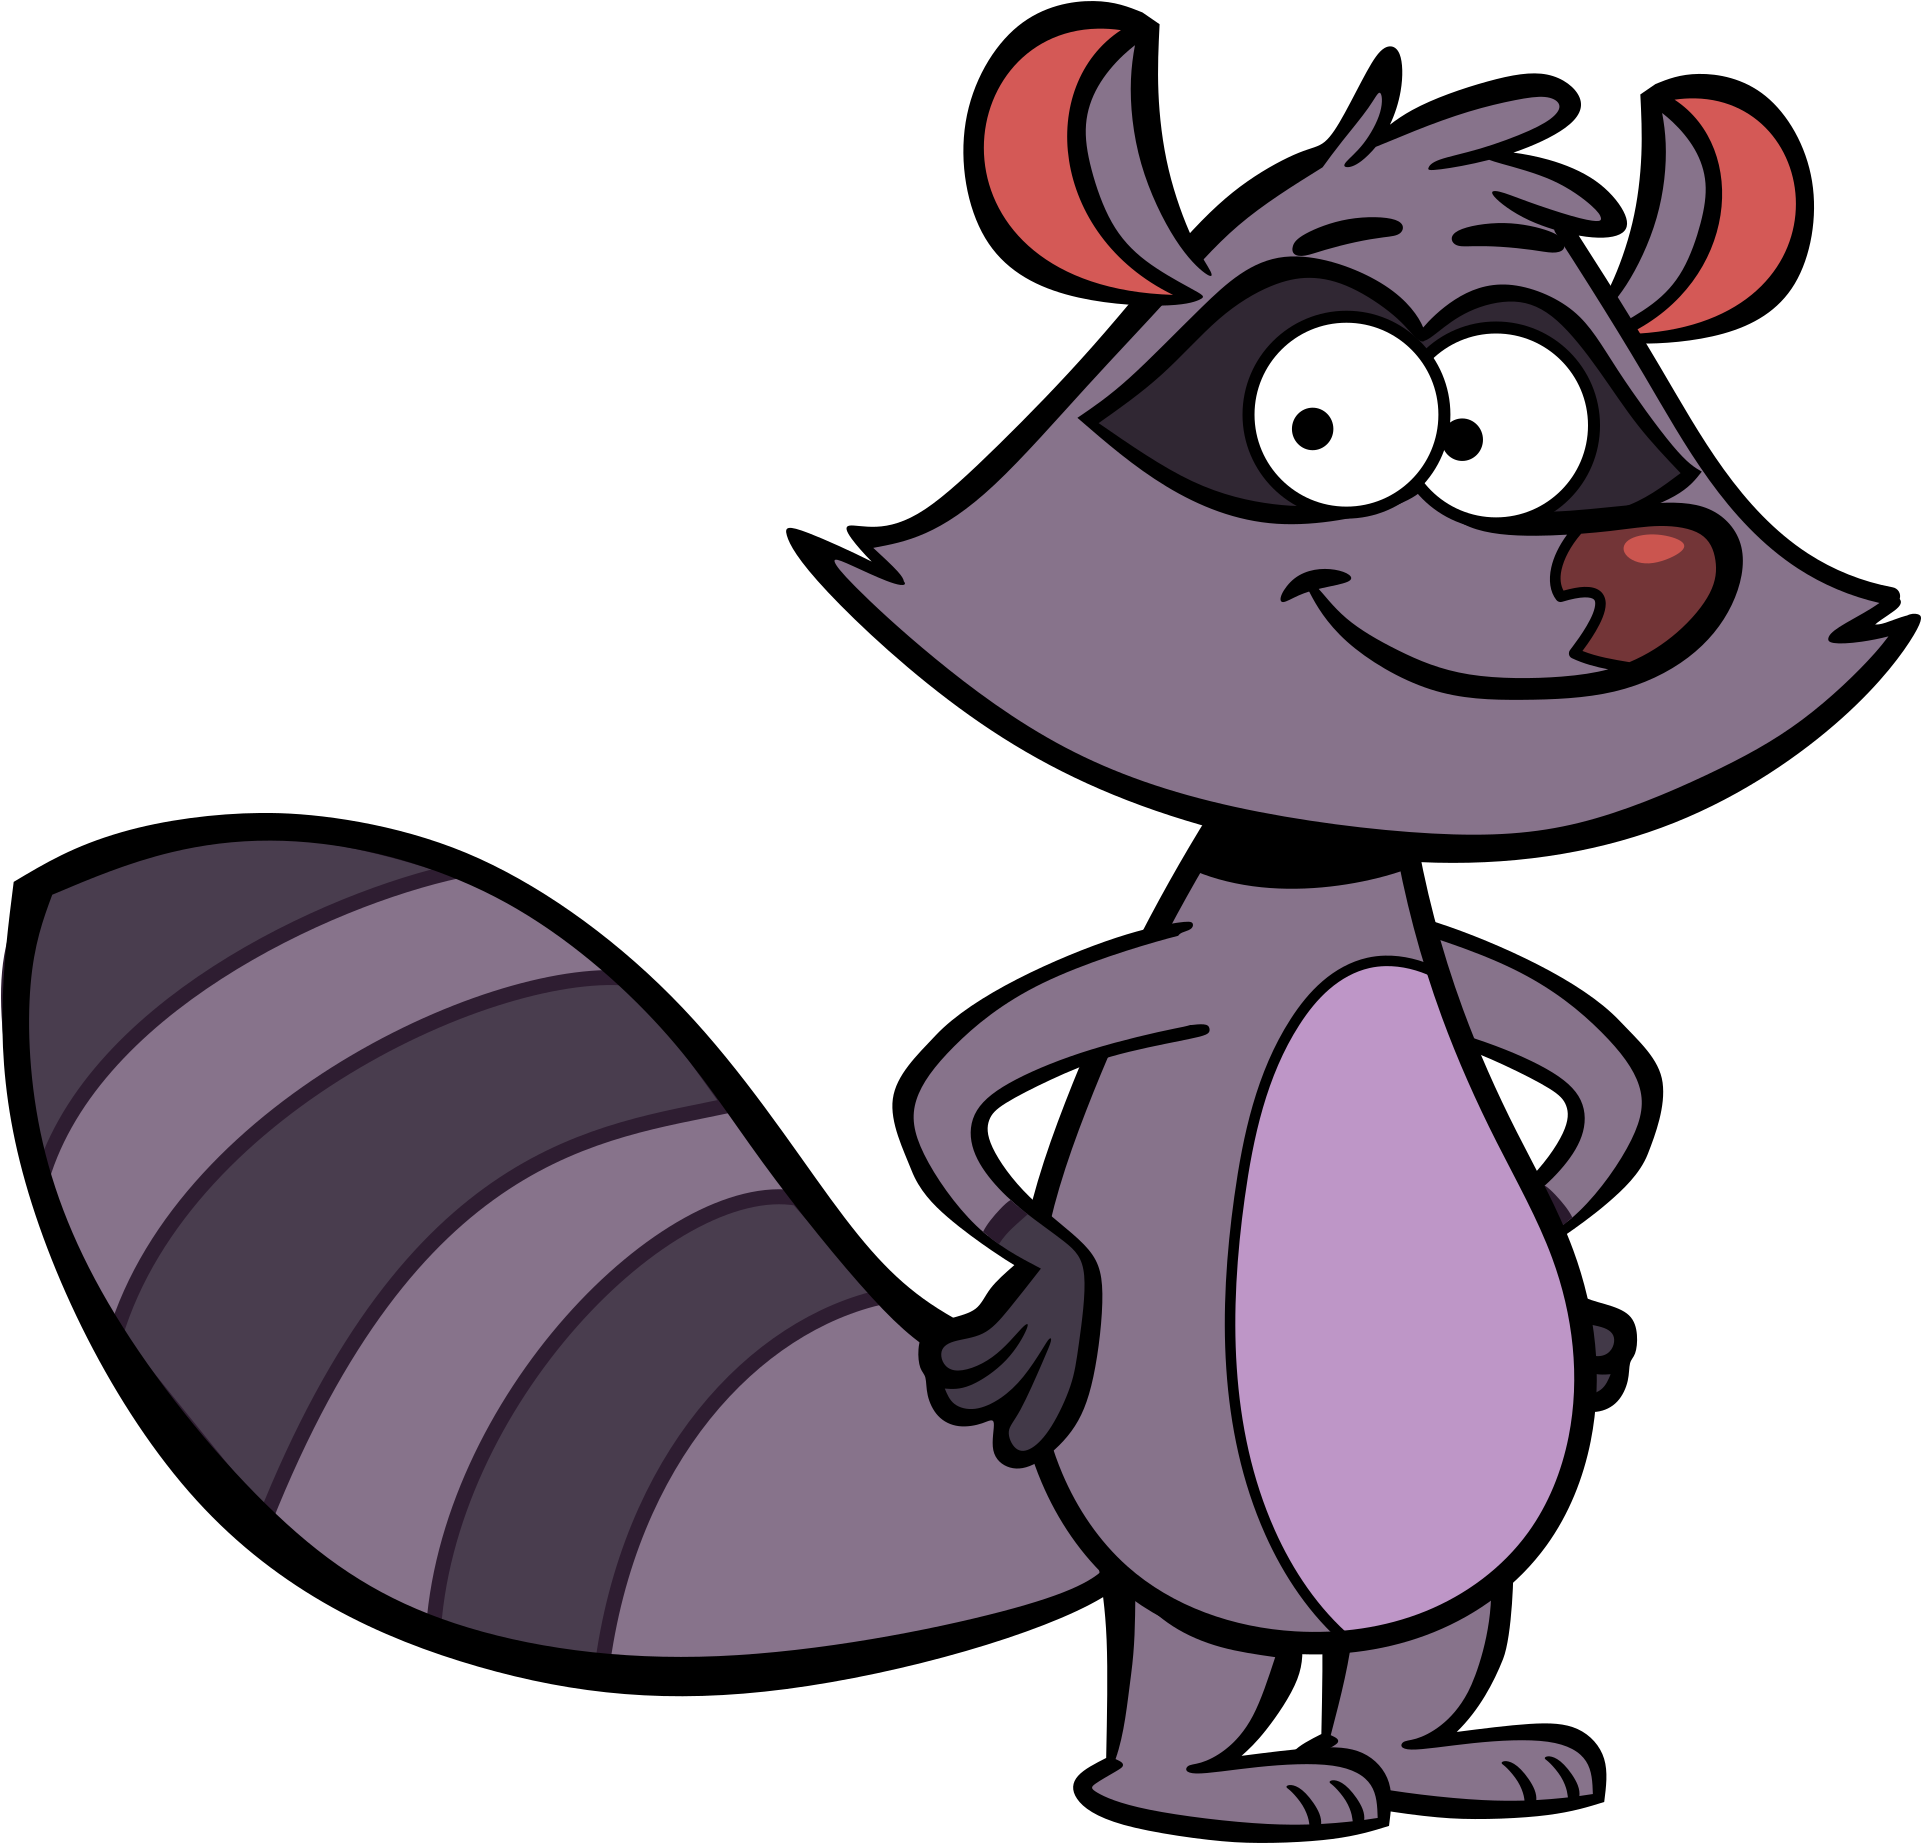 A Cartoon Raccoon With A Black Background